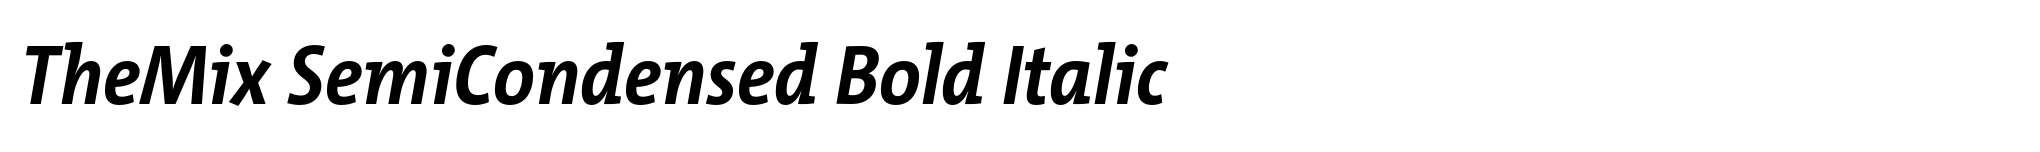 TheMix SemiCondensed Bold Italic image